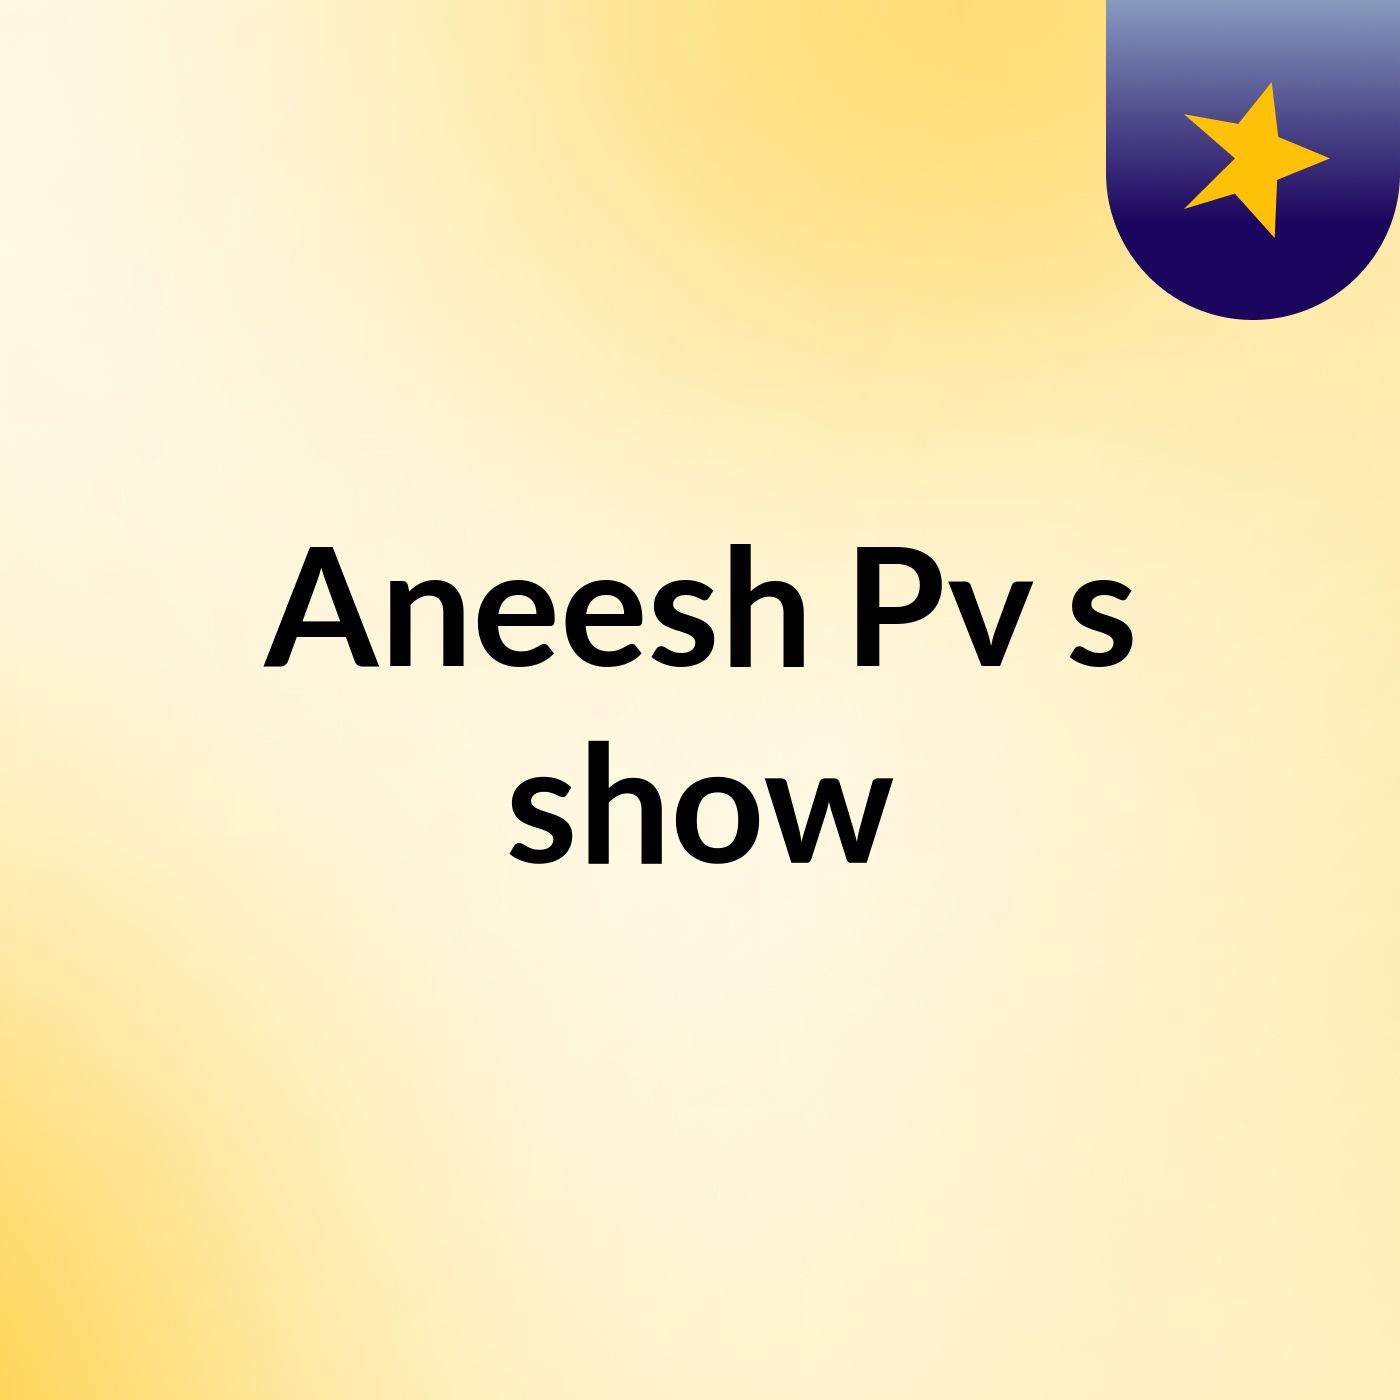 Aneesh Pv's show